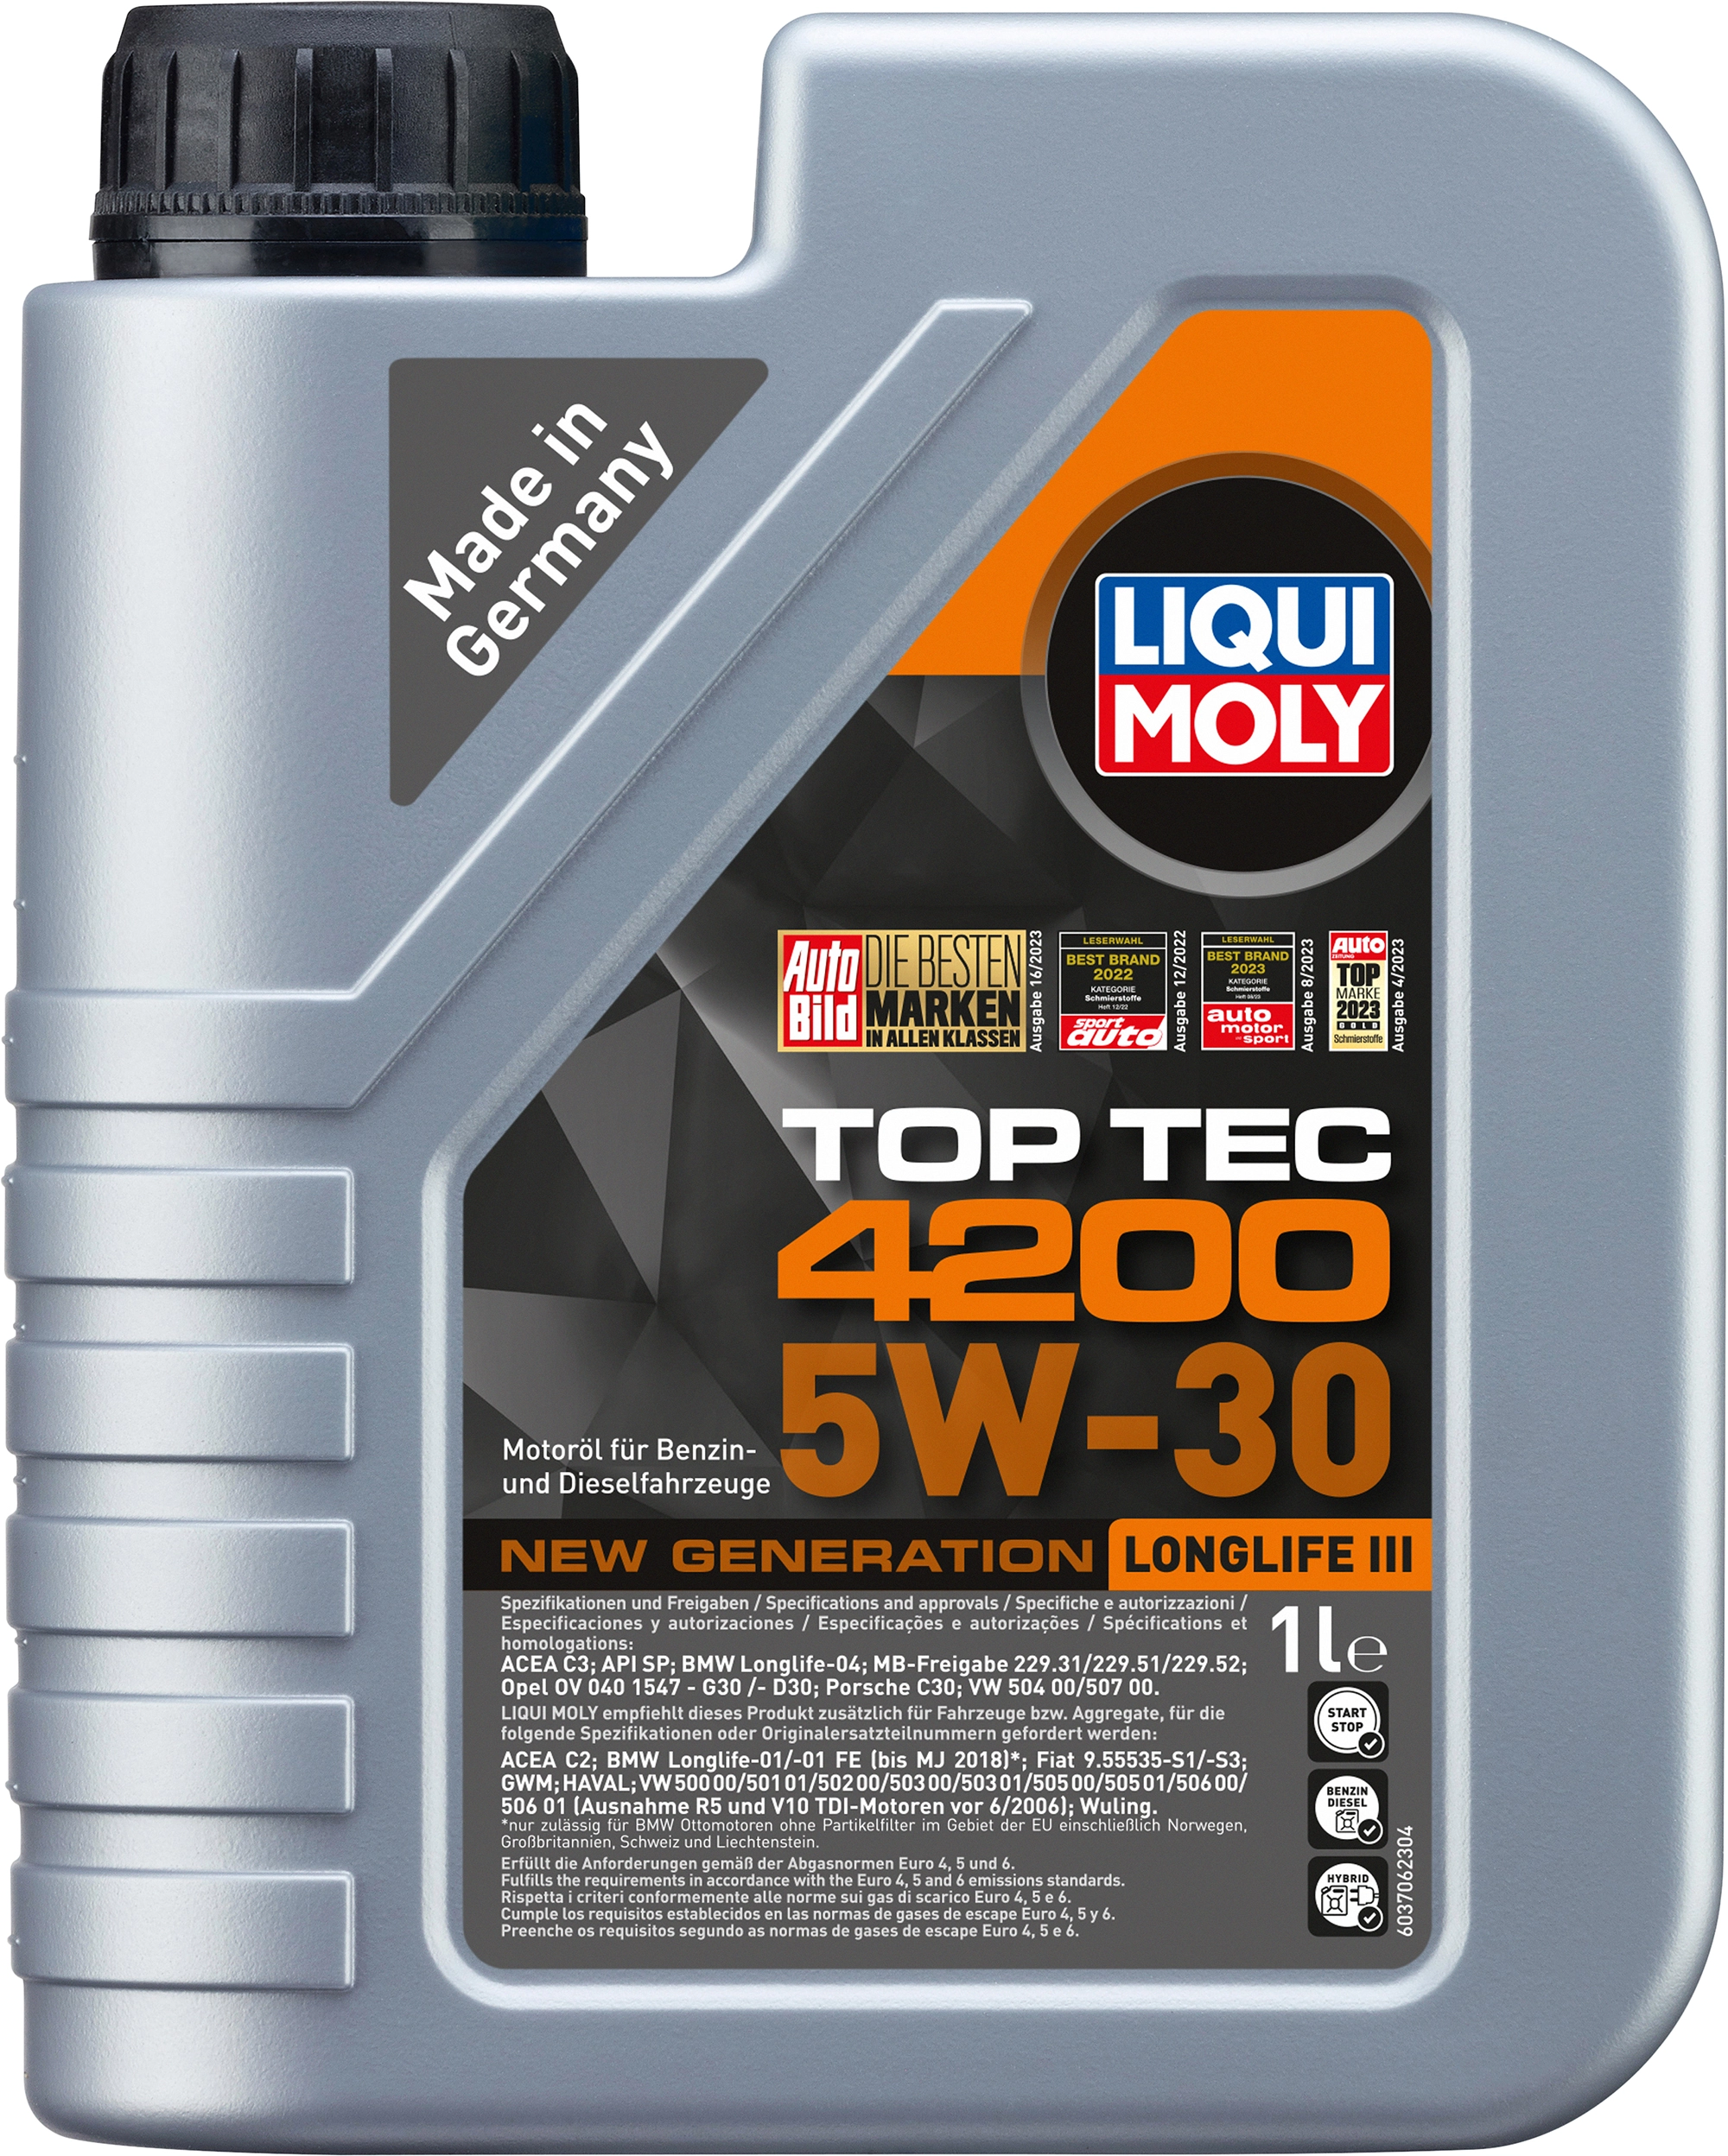 Liqui Moly 5W-30 Top Tec 4200 Longlife 3 günstig kaufen!